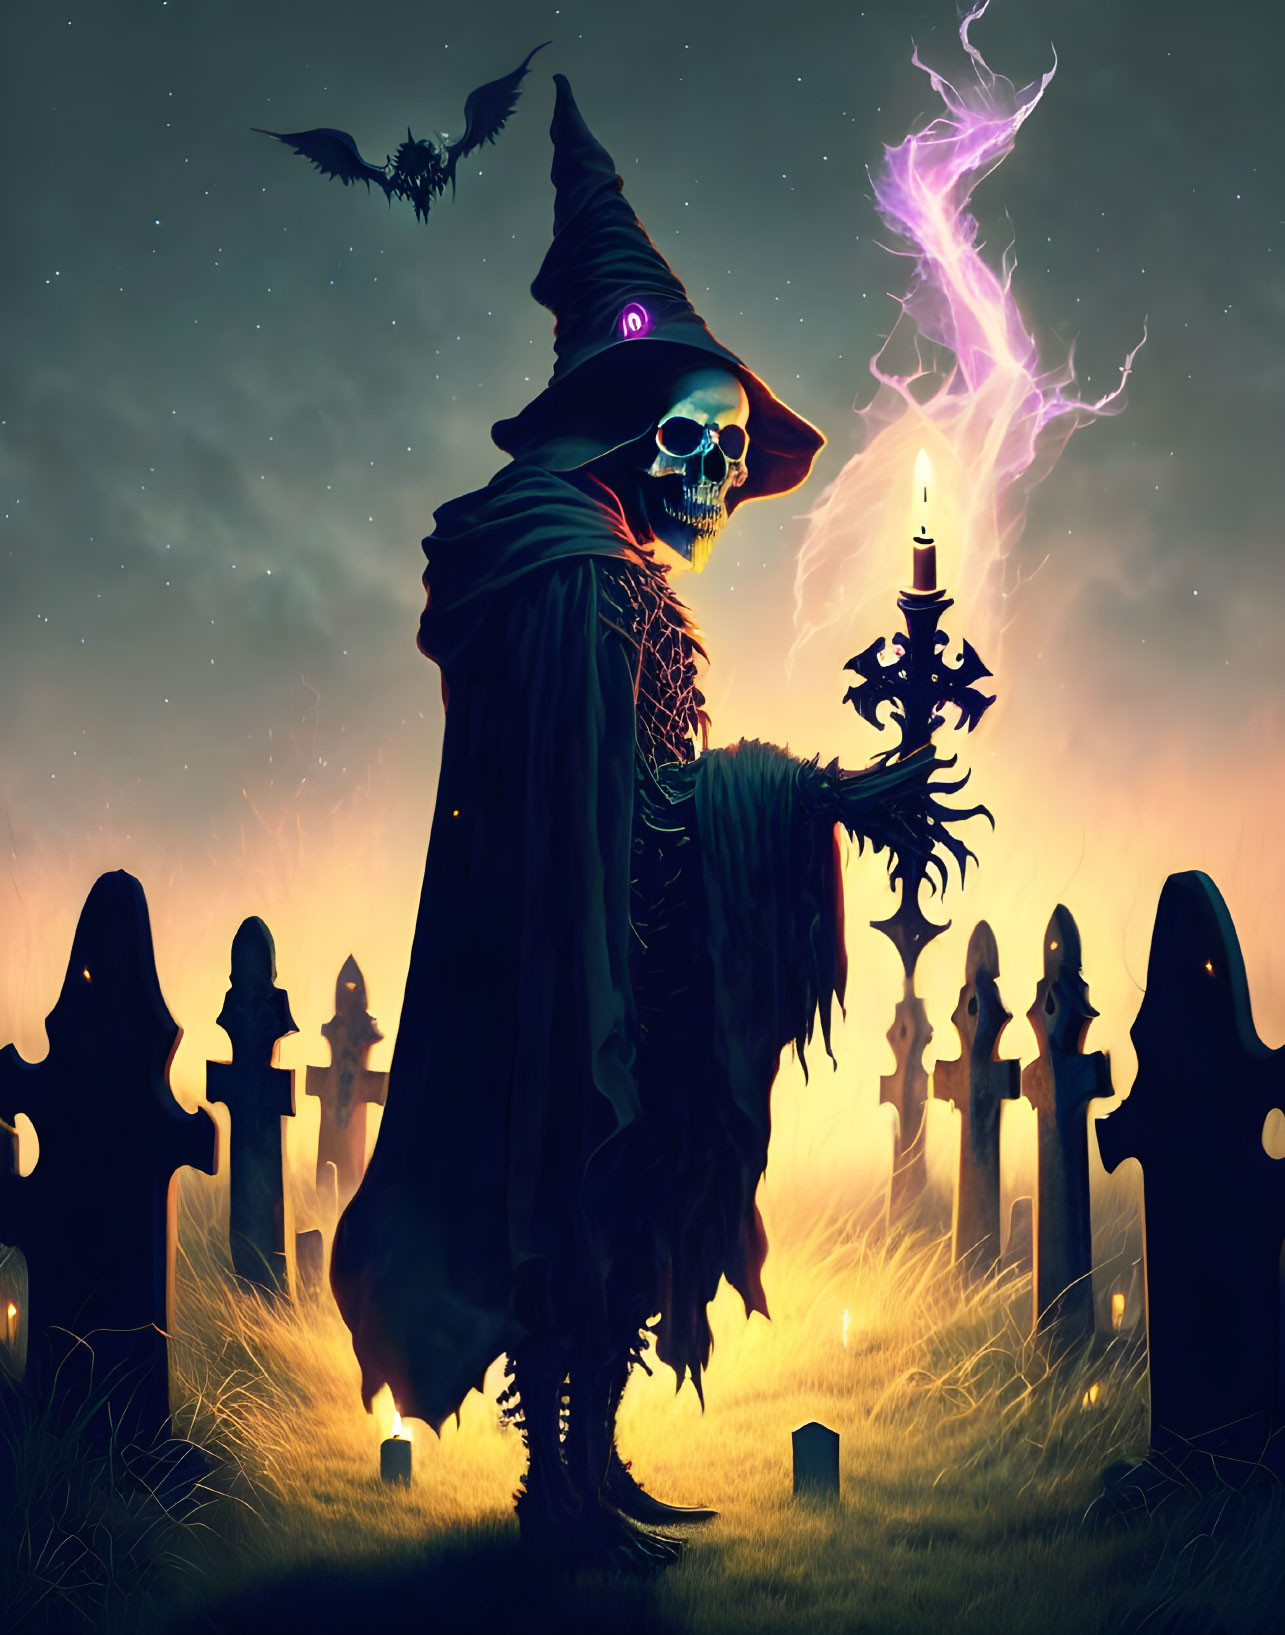 Skeleton in Wizard's Robe with Candelabra in Graveyard Storm